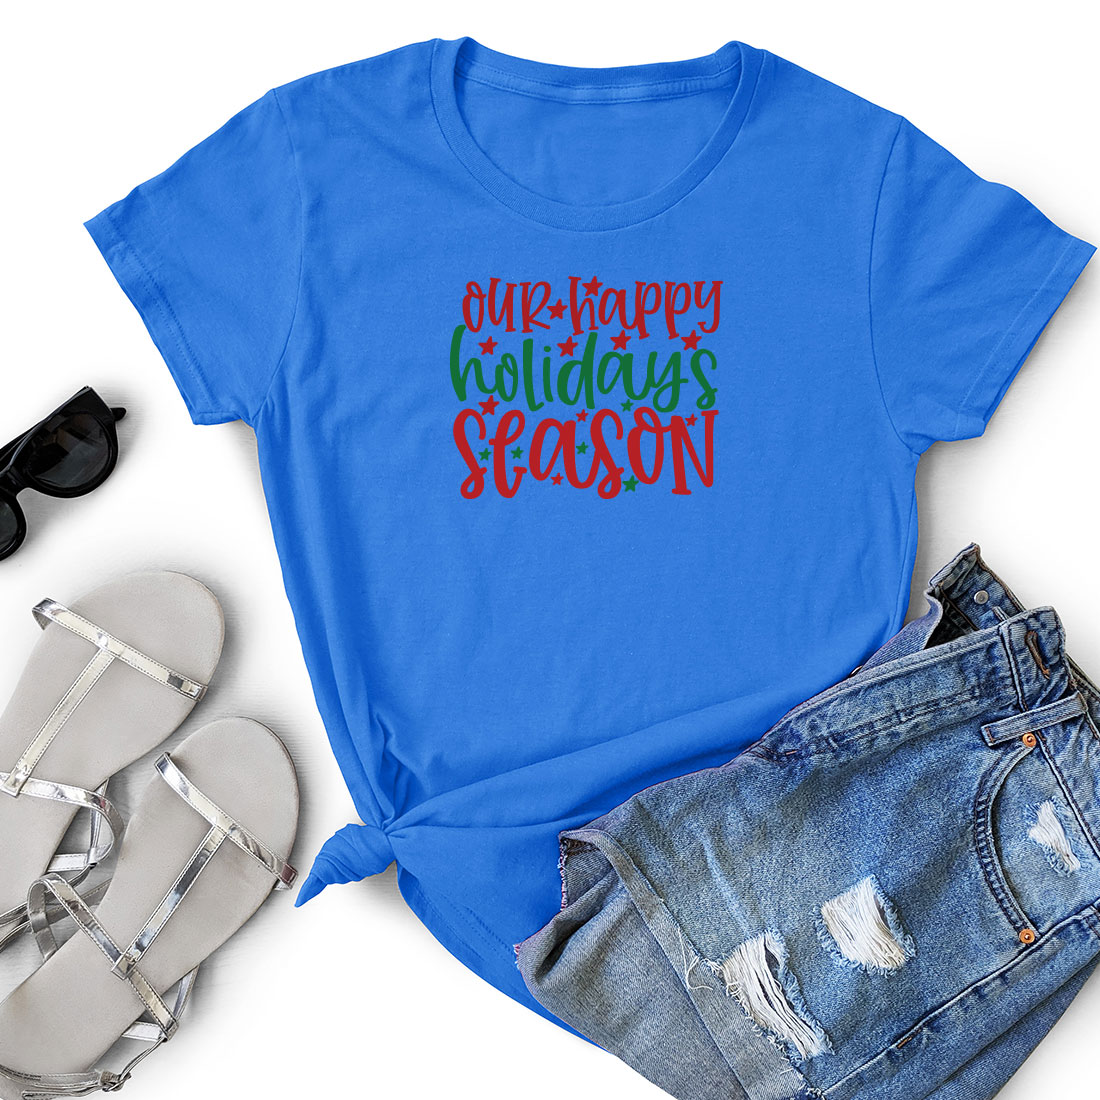 T - shirt that says giveaway holiday season next to a pair of shorts.